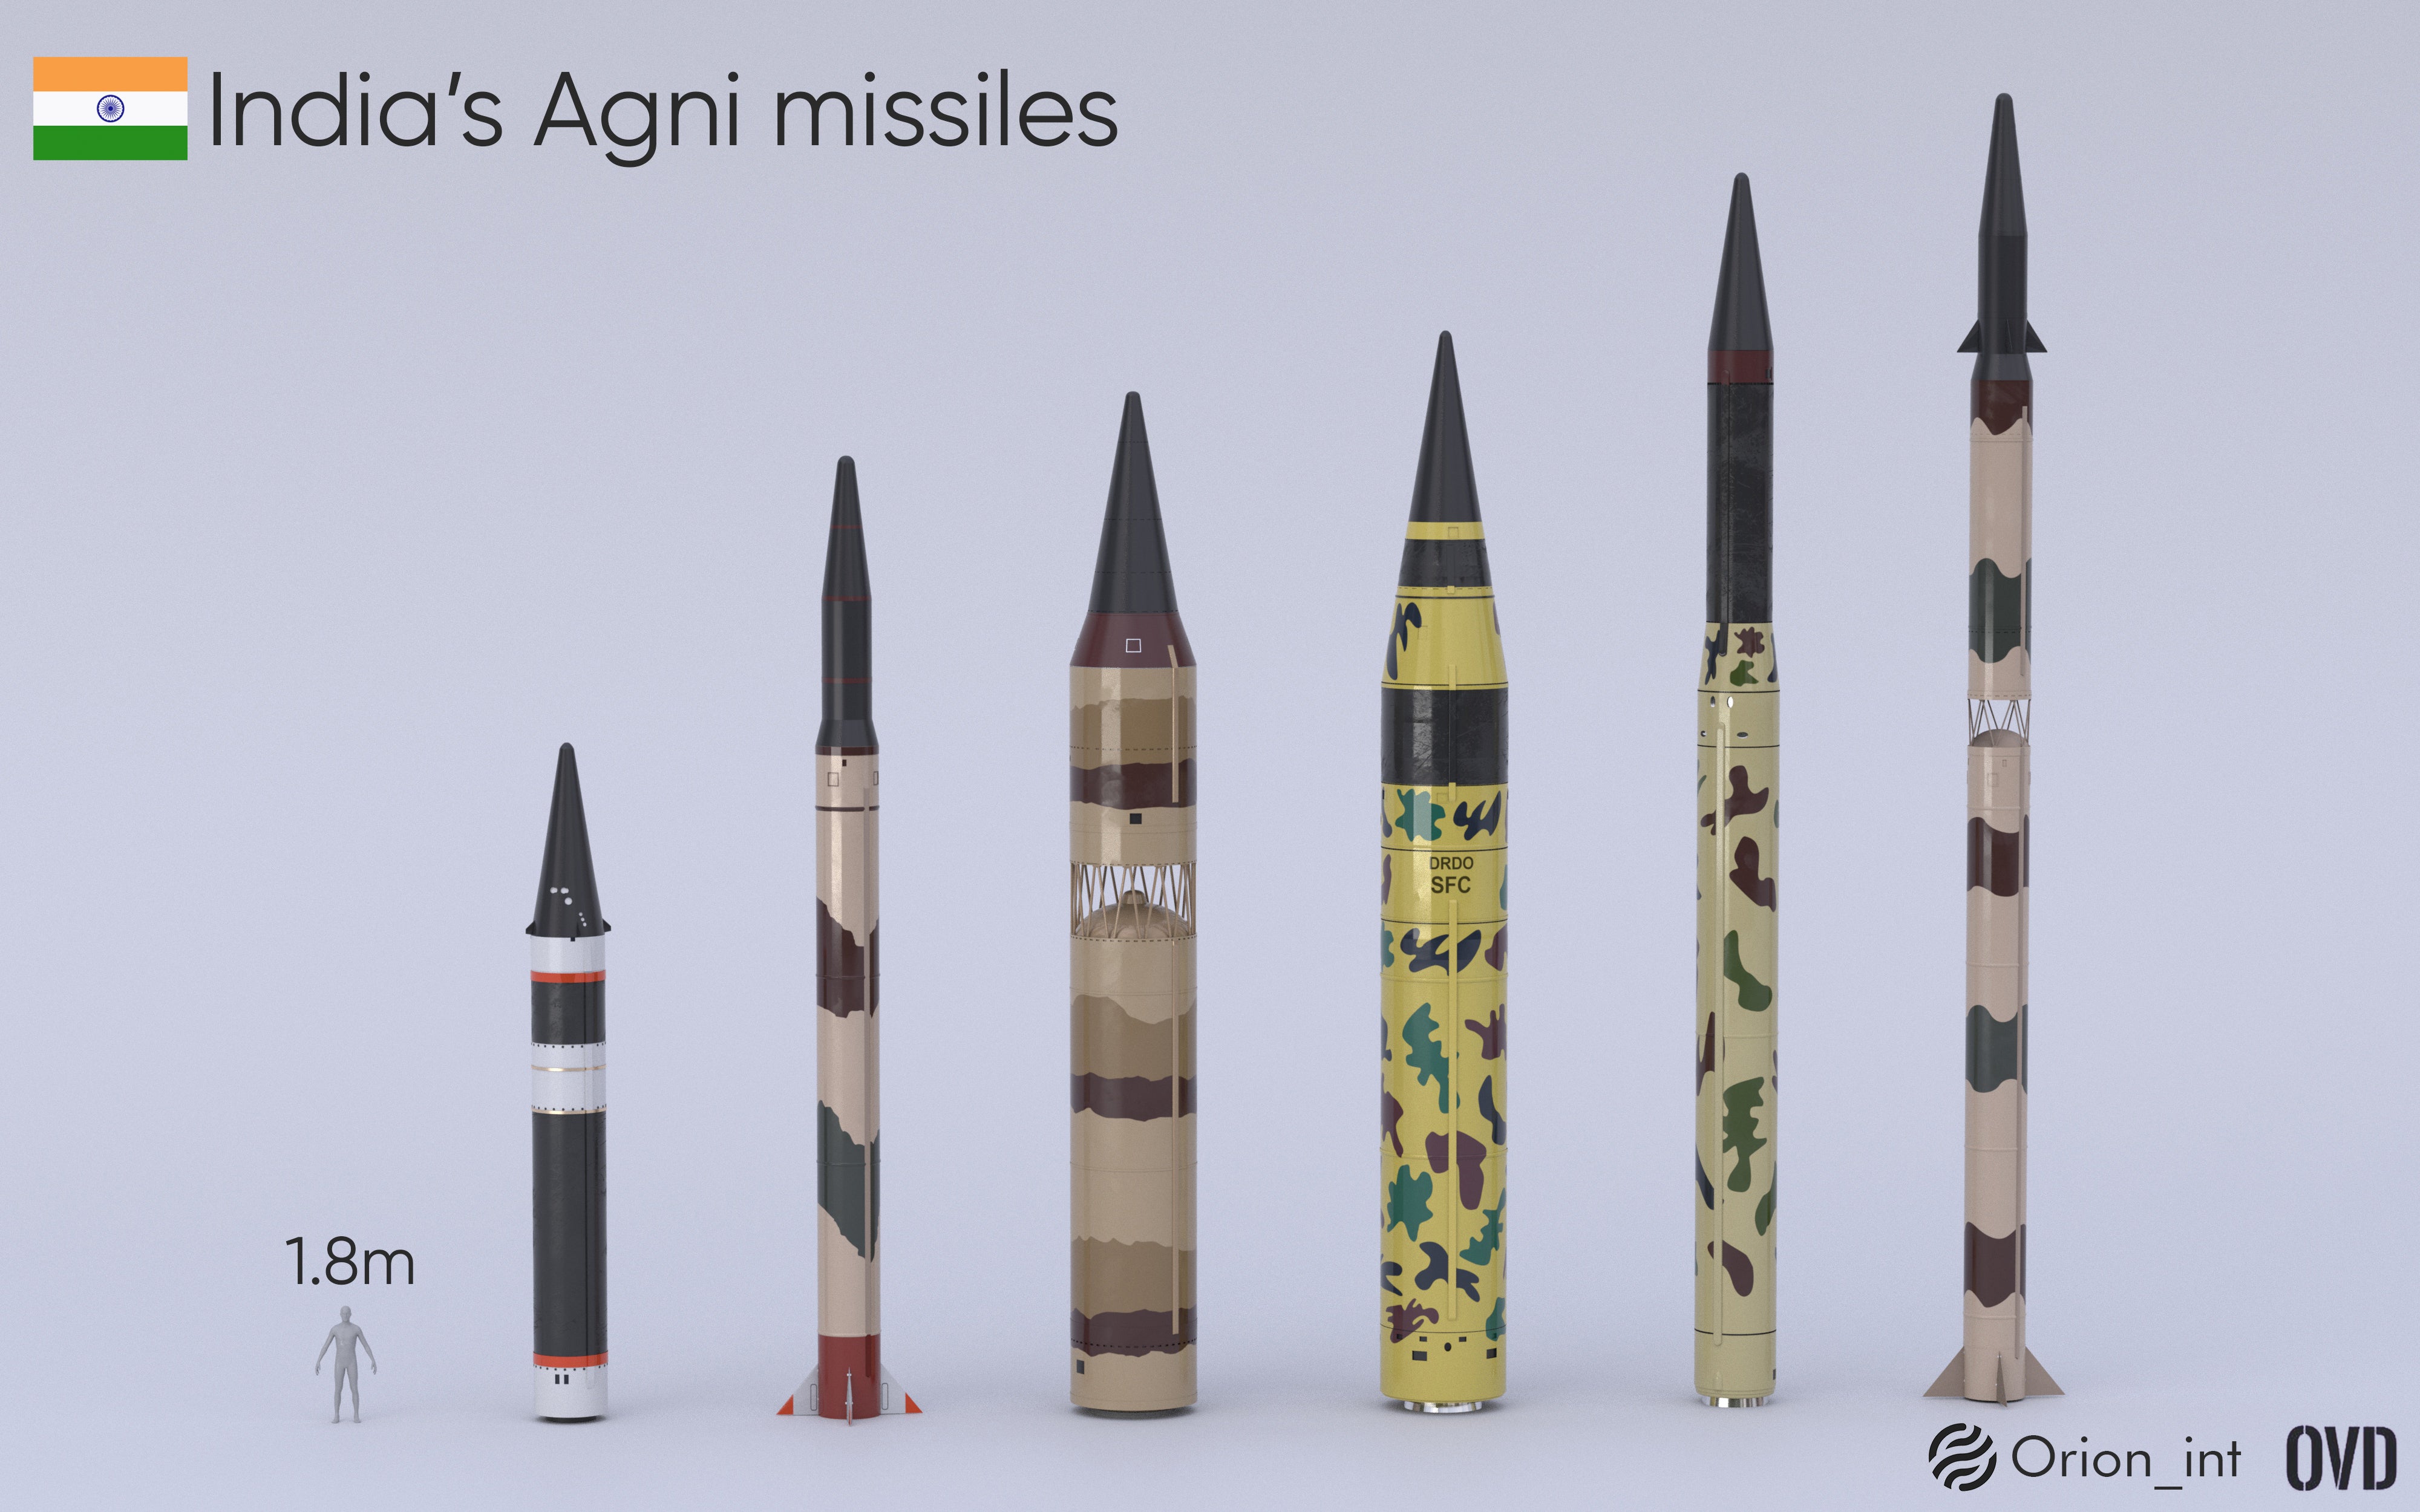 Agni: Exploring the Backbone of India's Strategic Arsenal